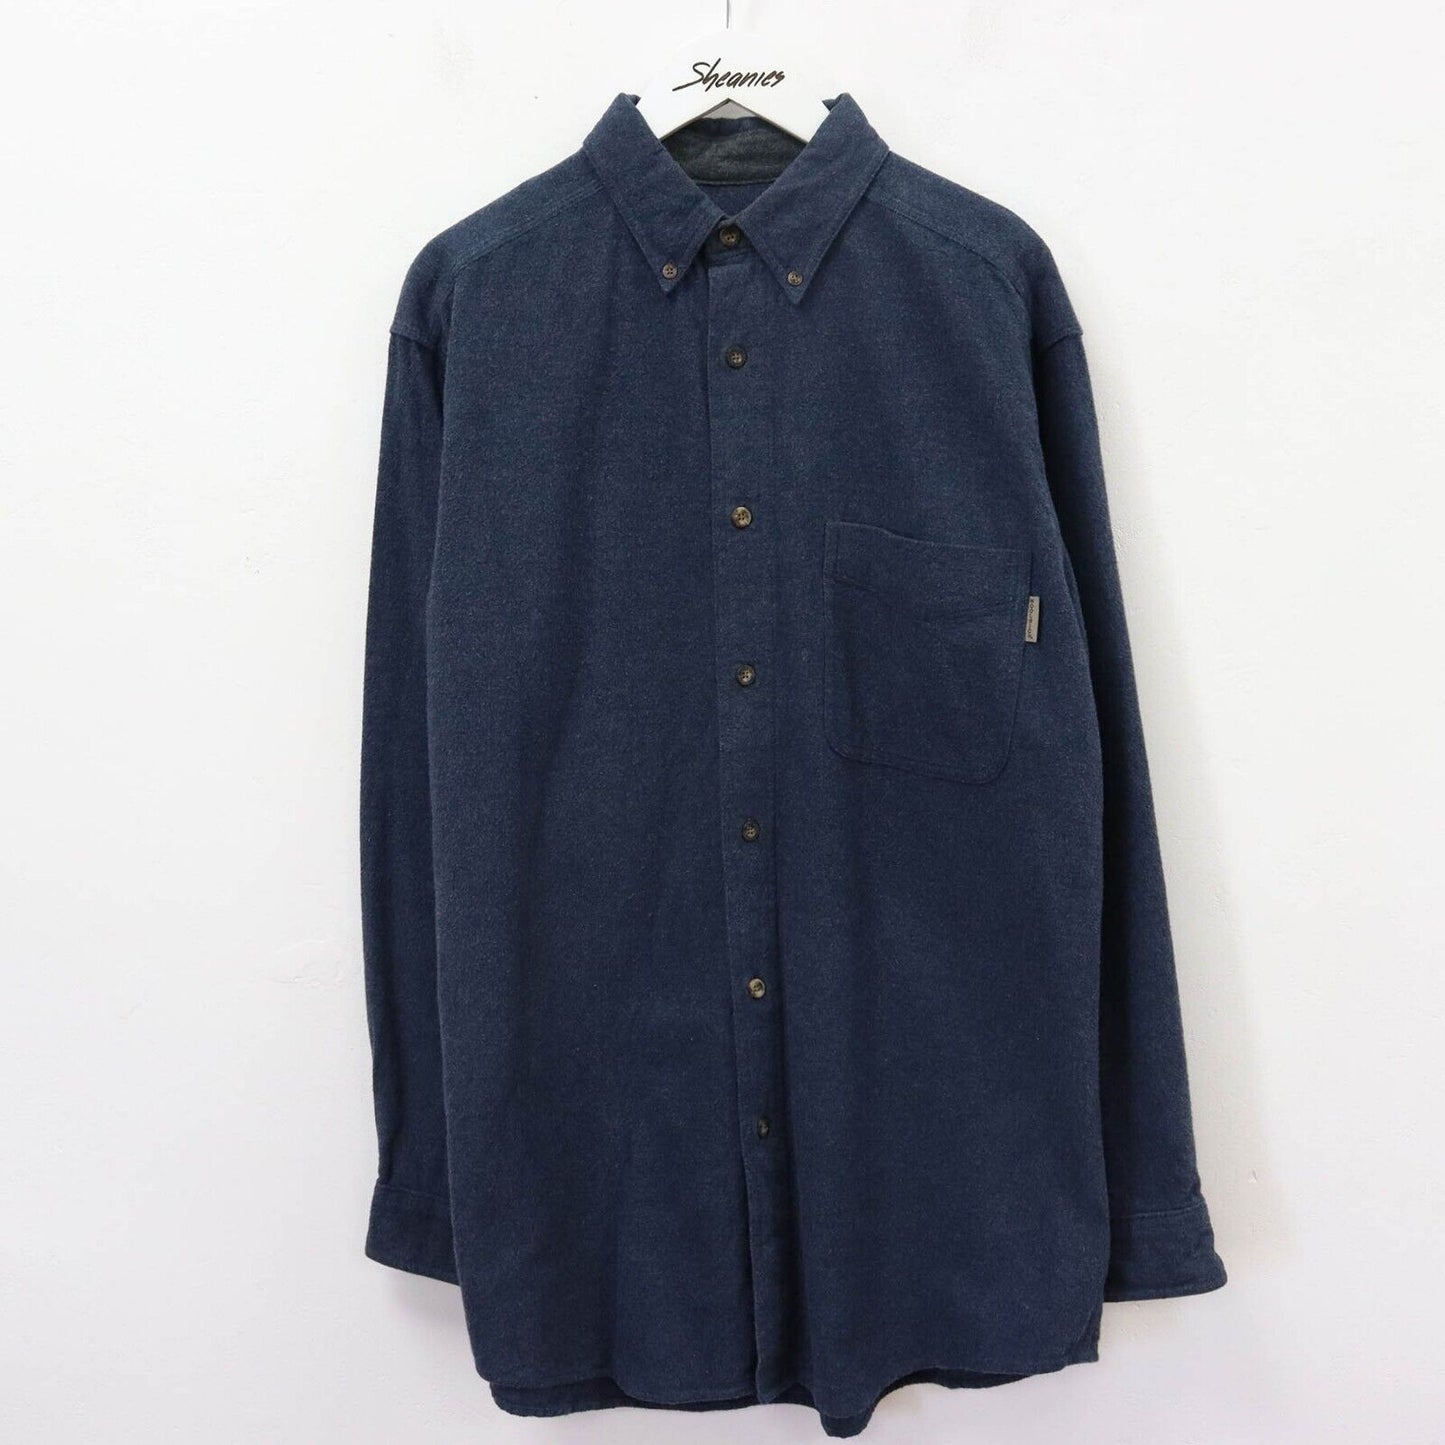 Woolrich Flannel Shirt Size M